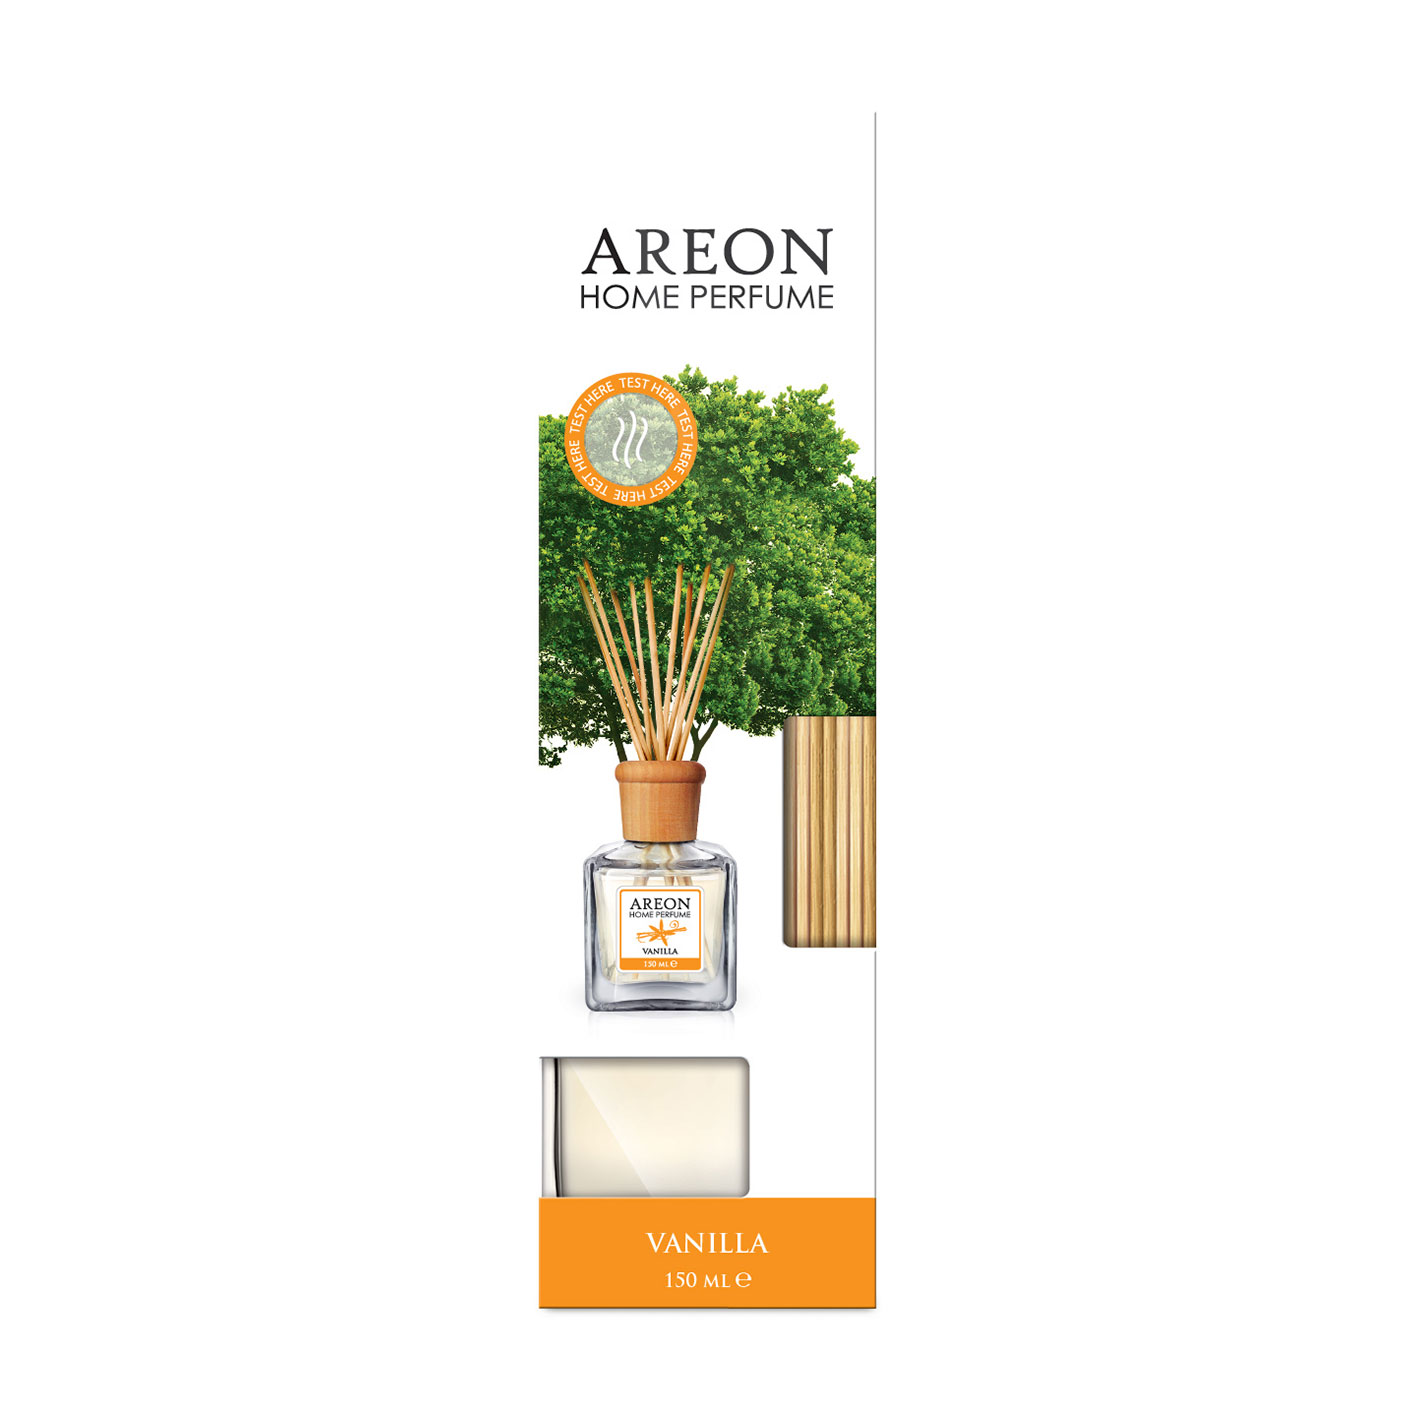 Areon Home Perfume 150mL Vanilla